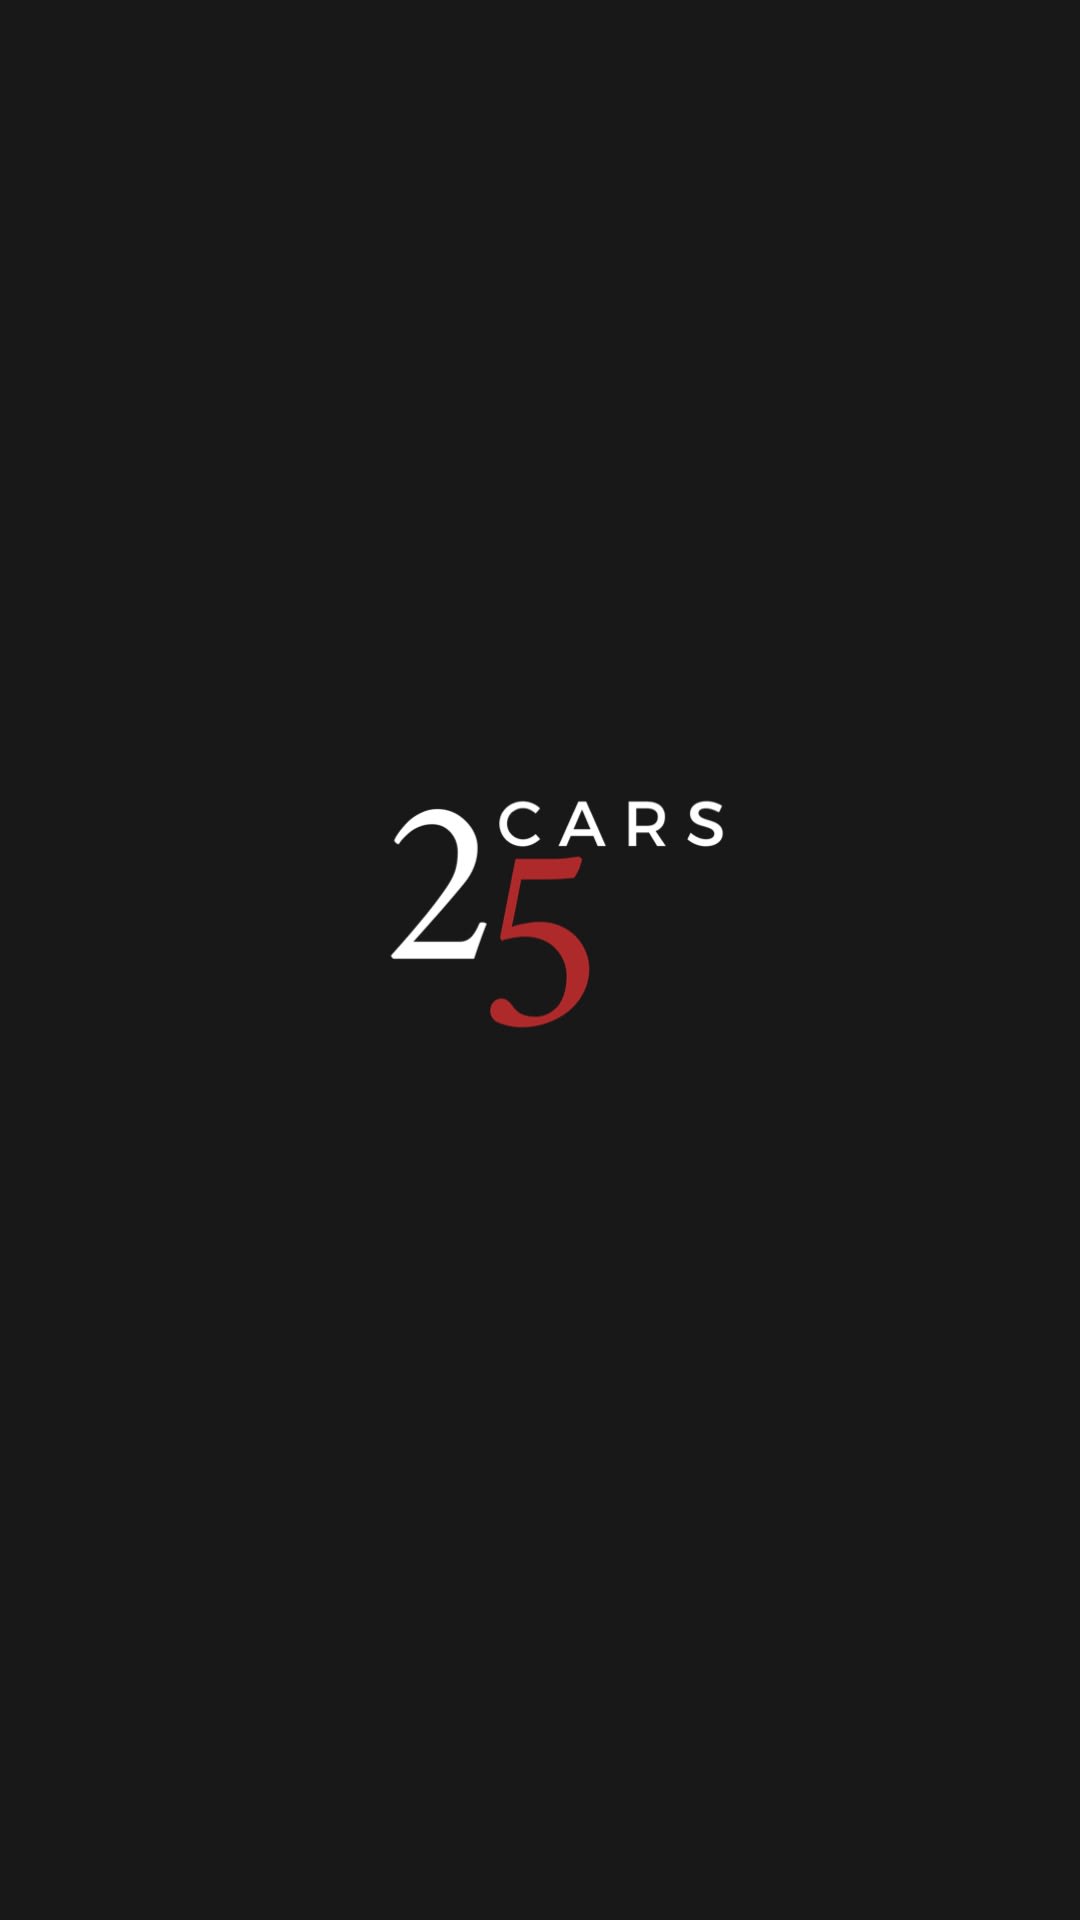 25 Cars